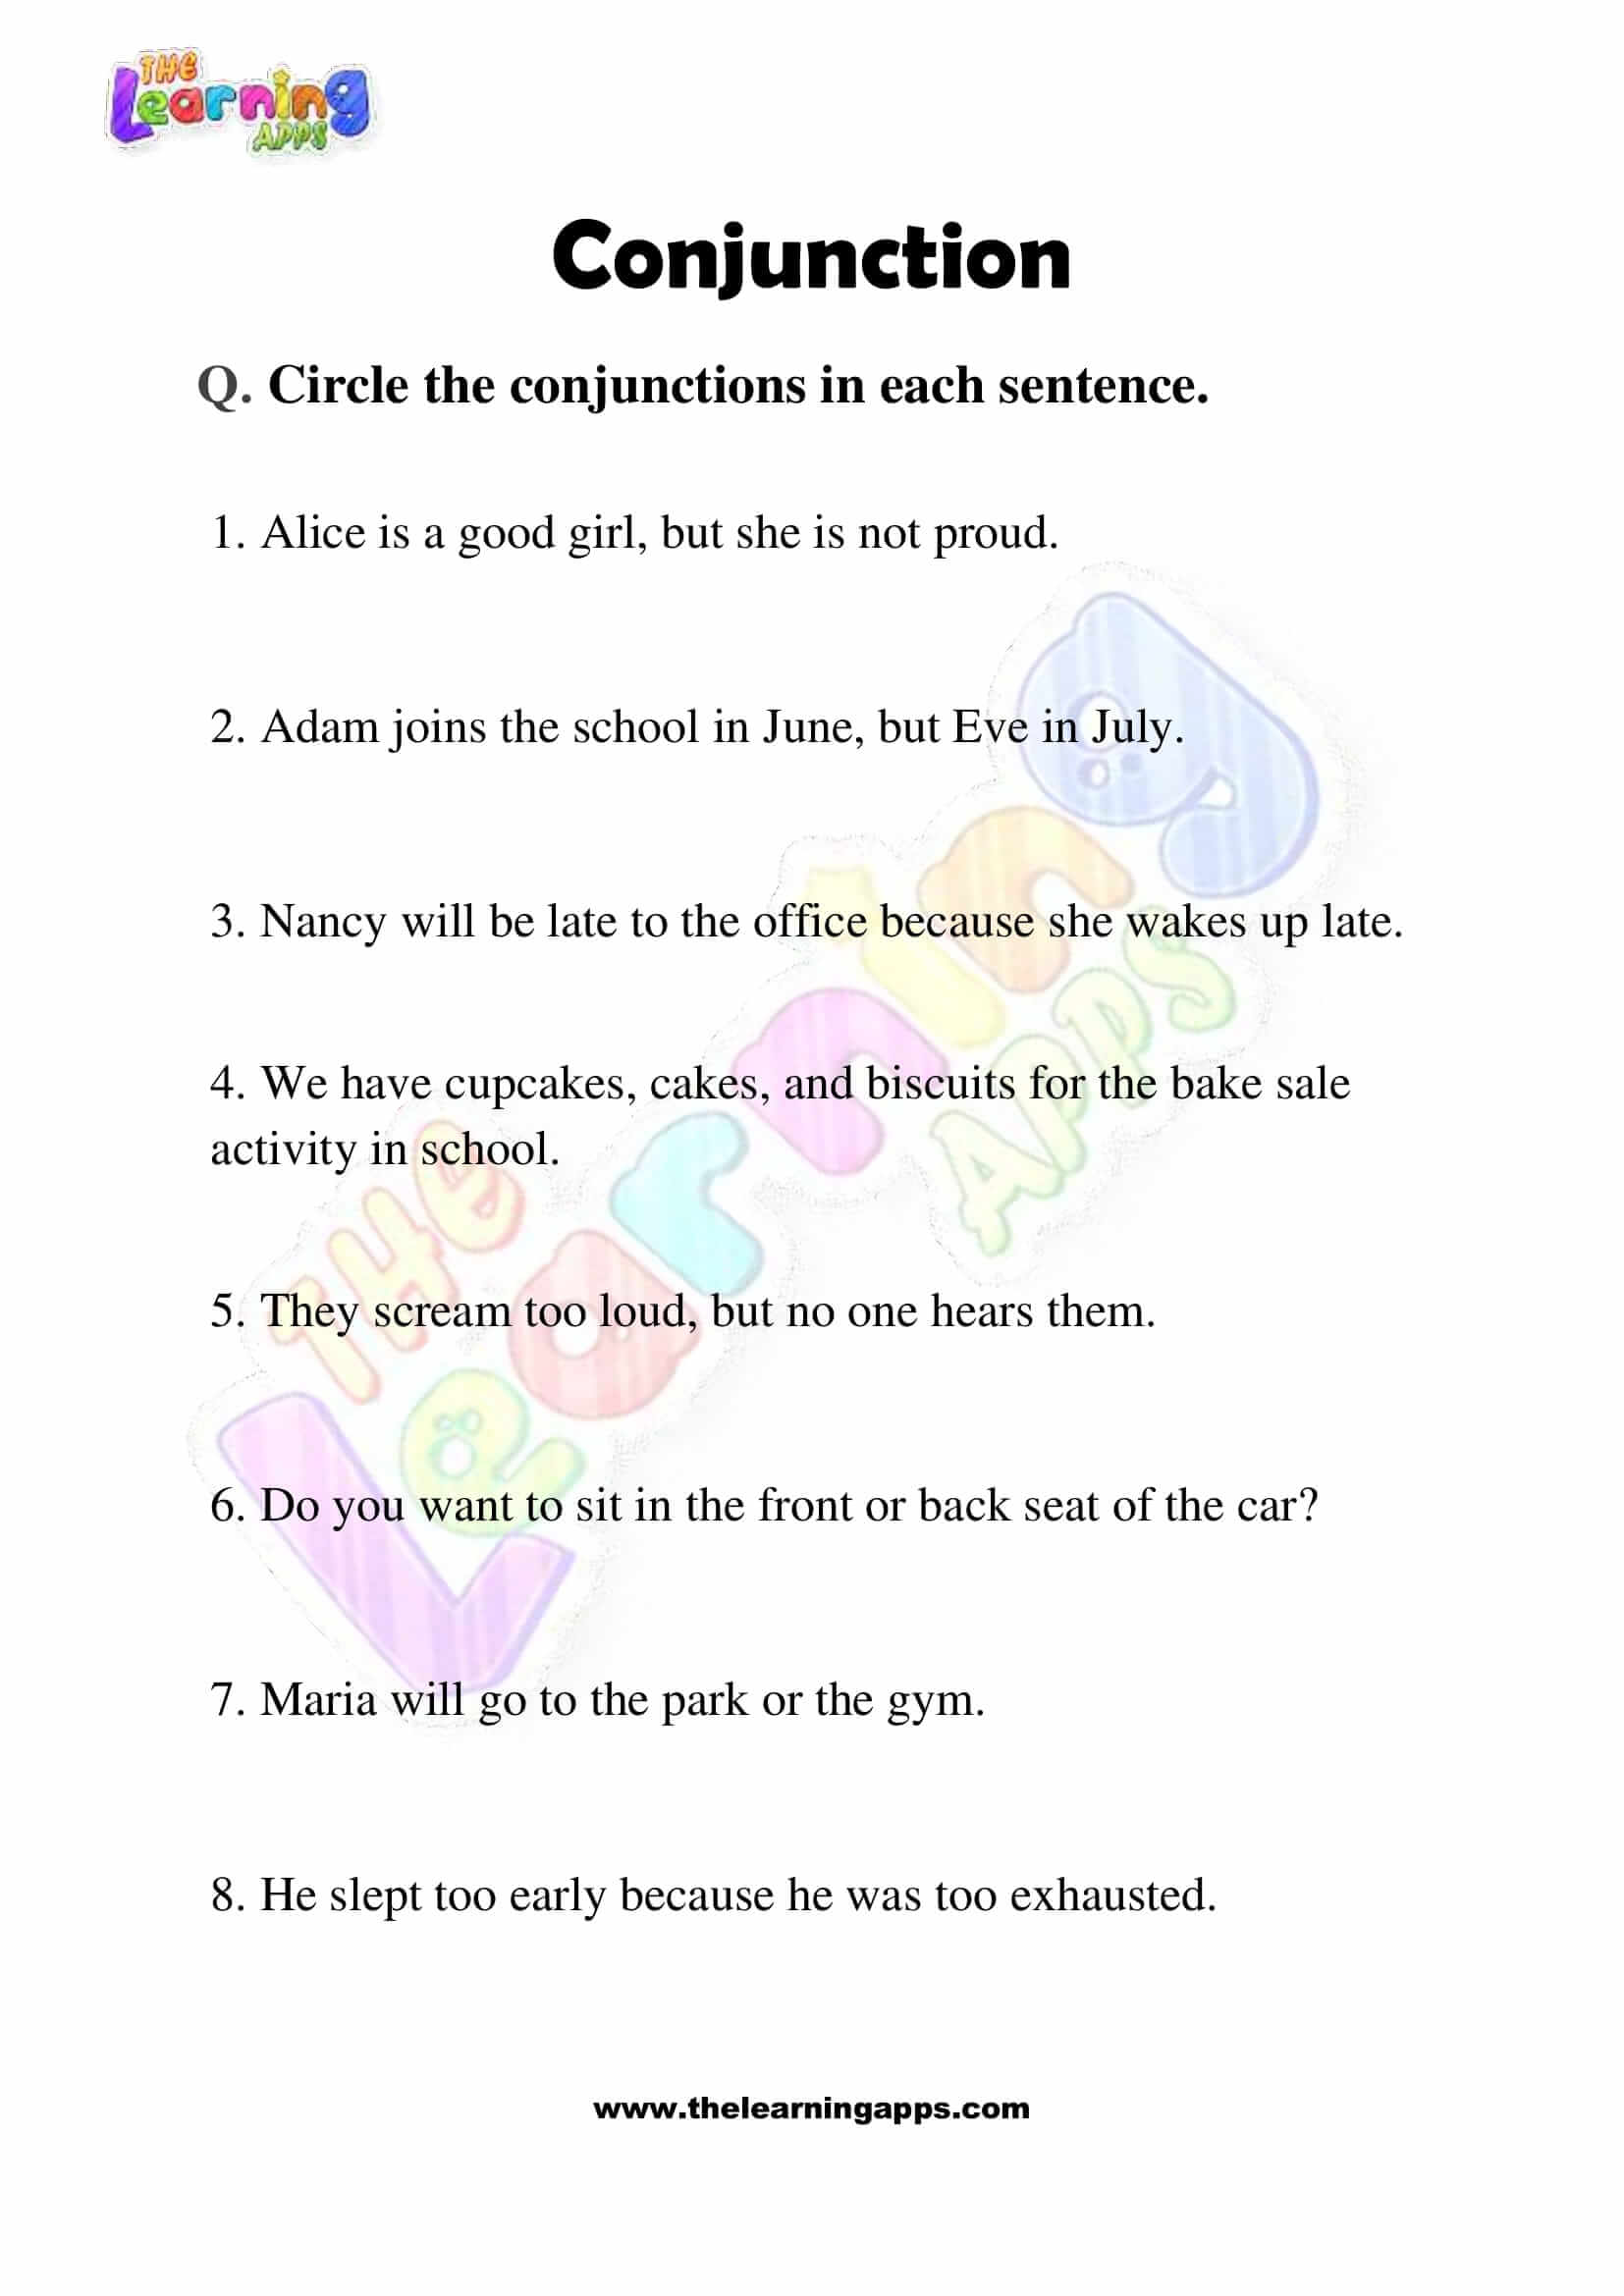 Conjunction Worksheets - Grade 3 - Activity 1